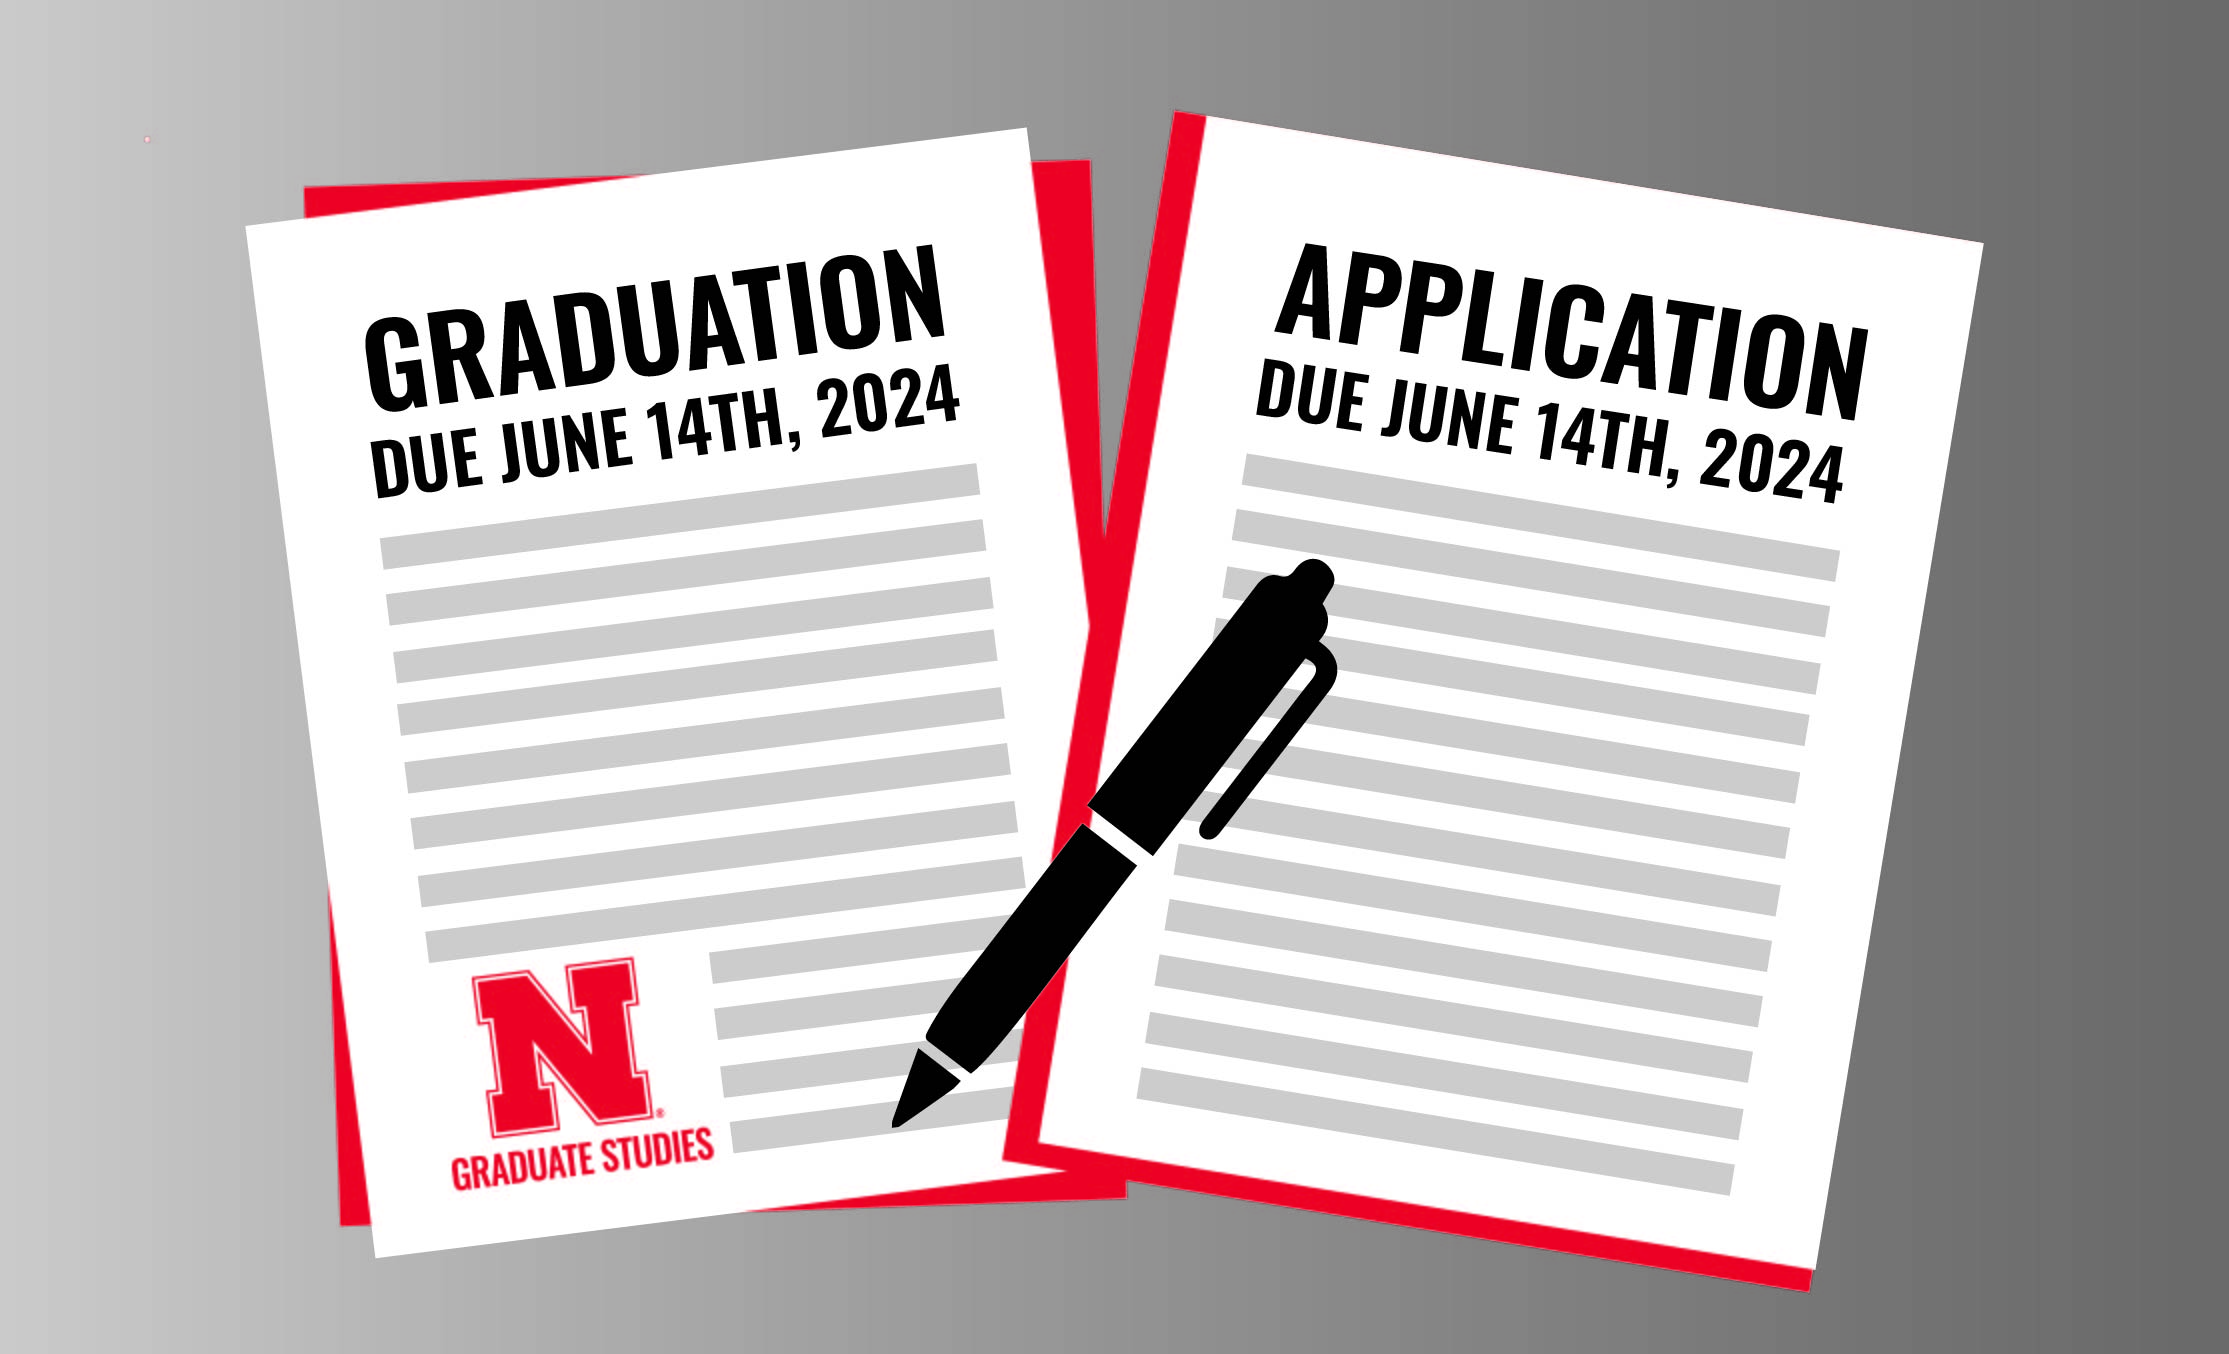 Application for Graduation Due June 14